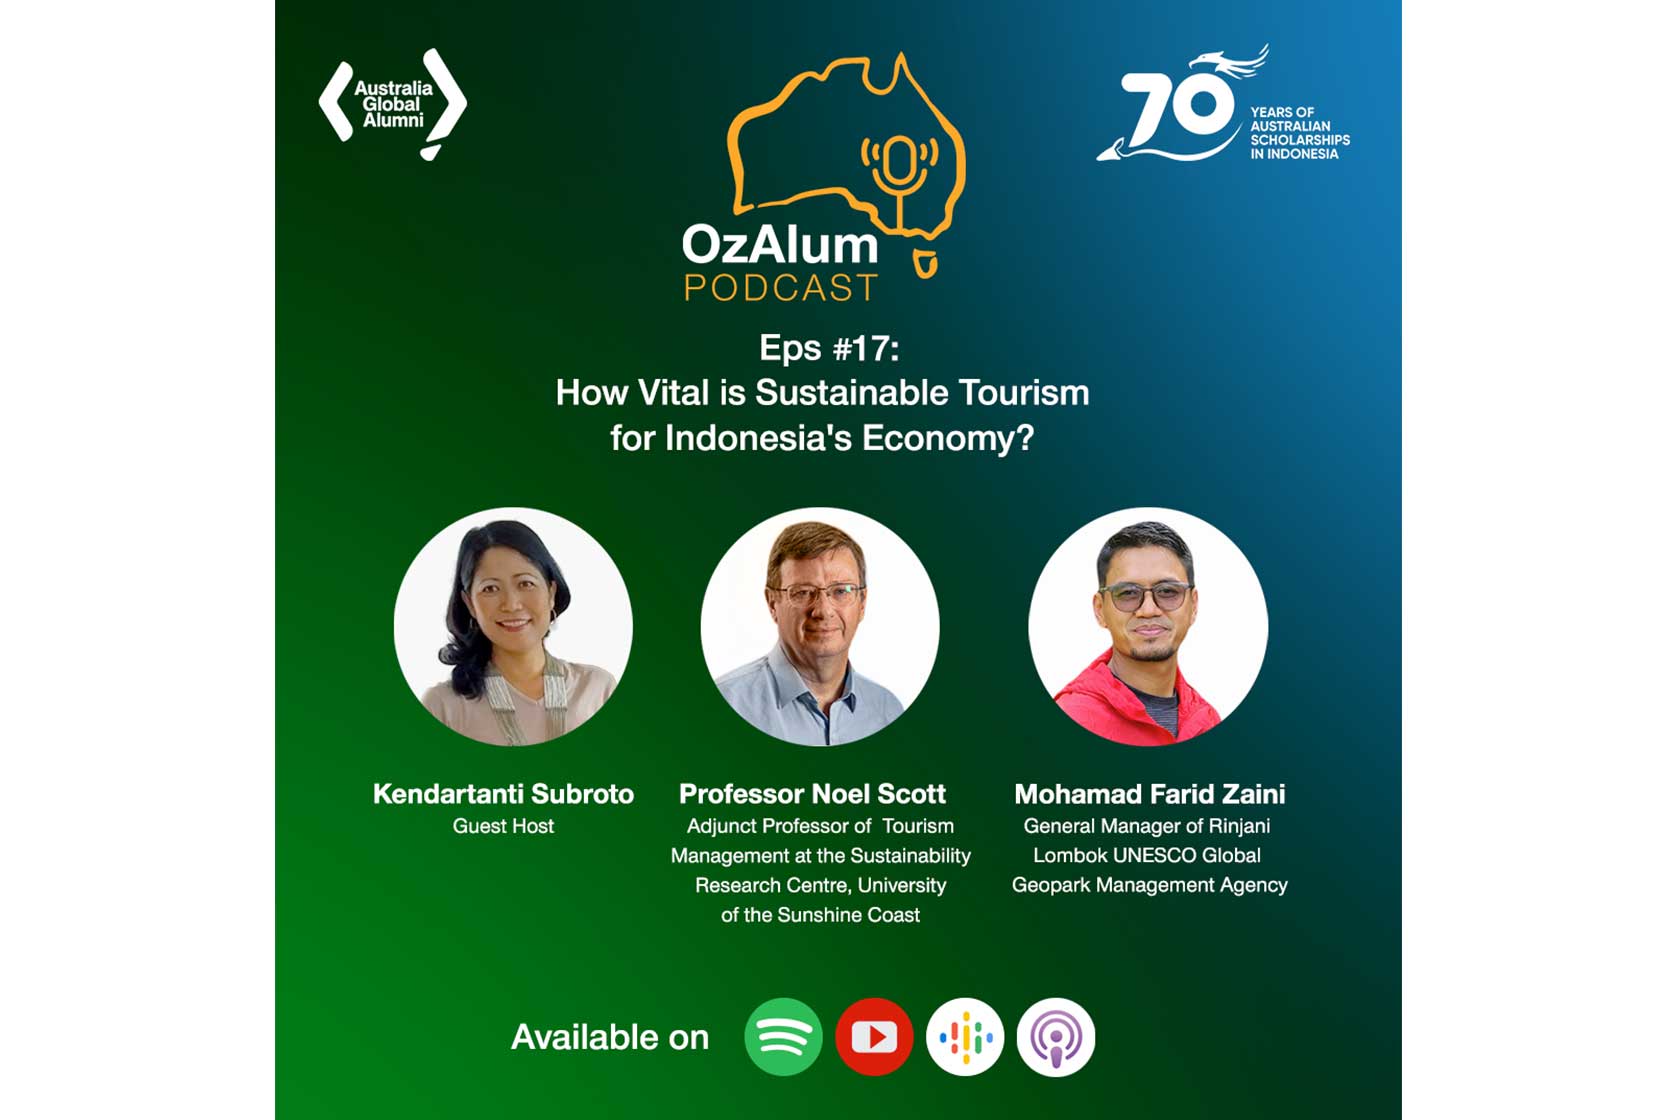 OzAlum Podcast Eps #17: How Vital Is Sustainable Tourism for Indonesia's Economy?